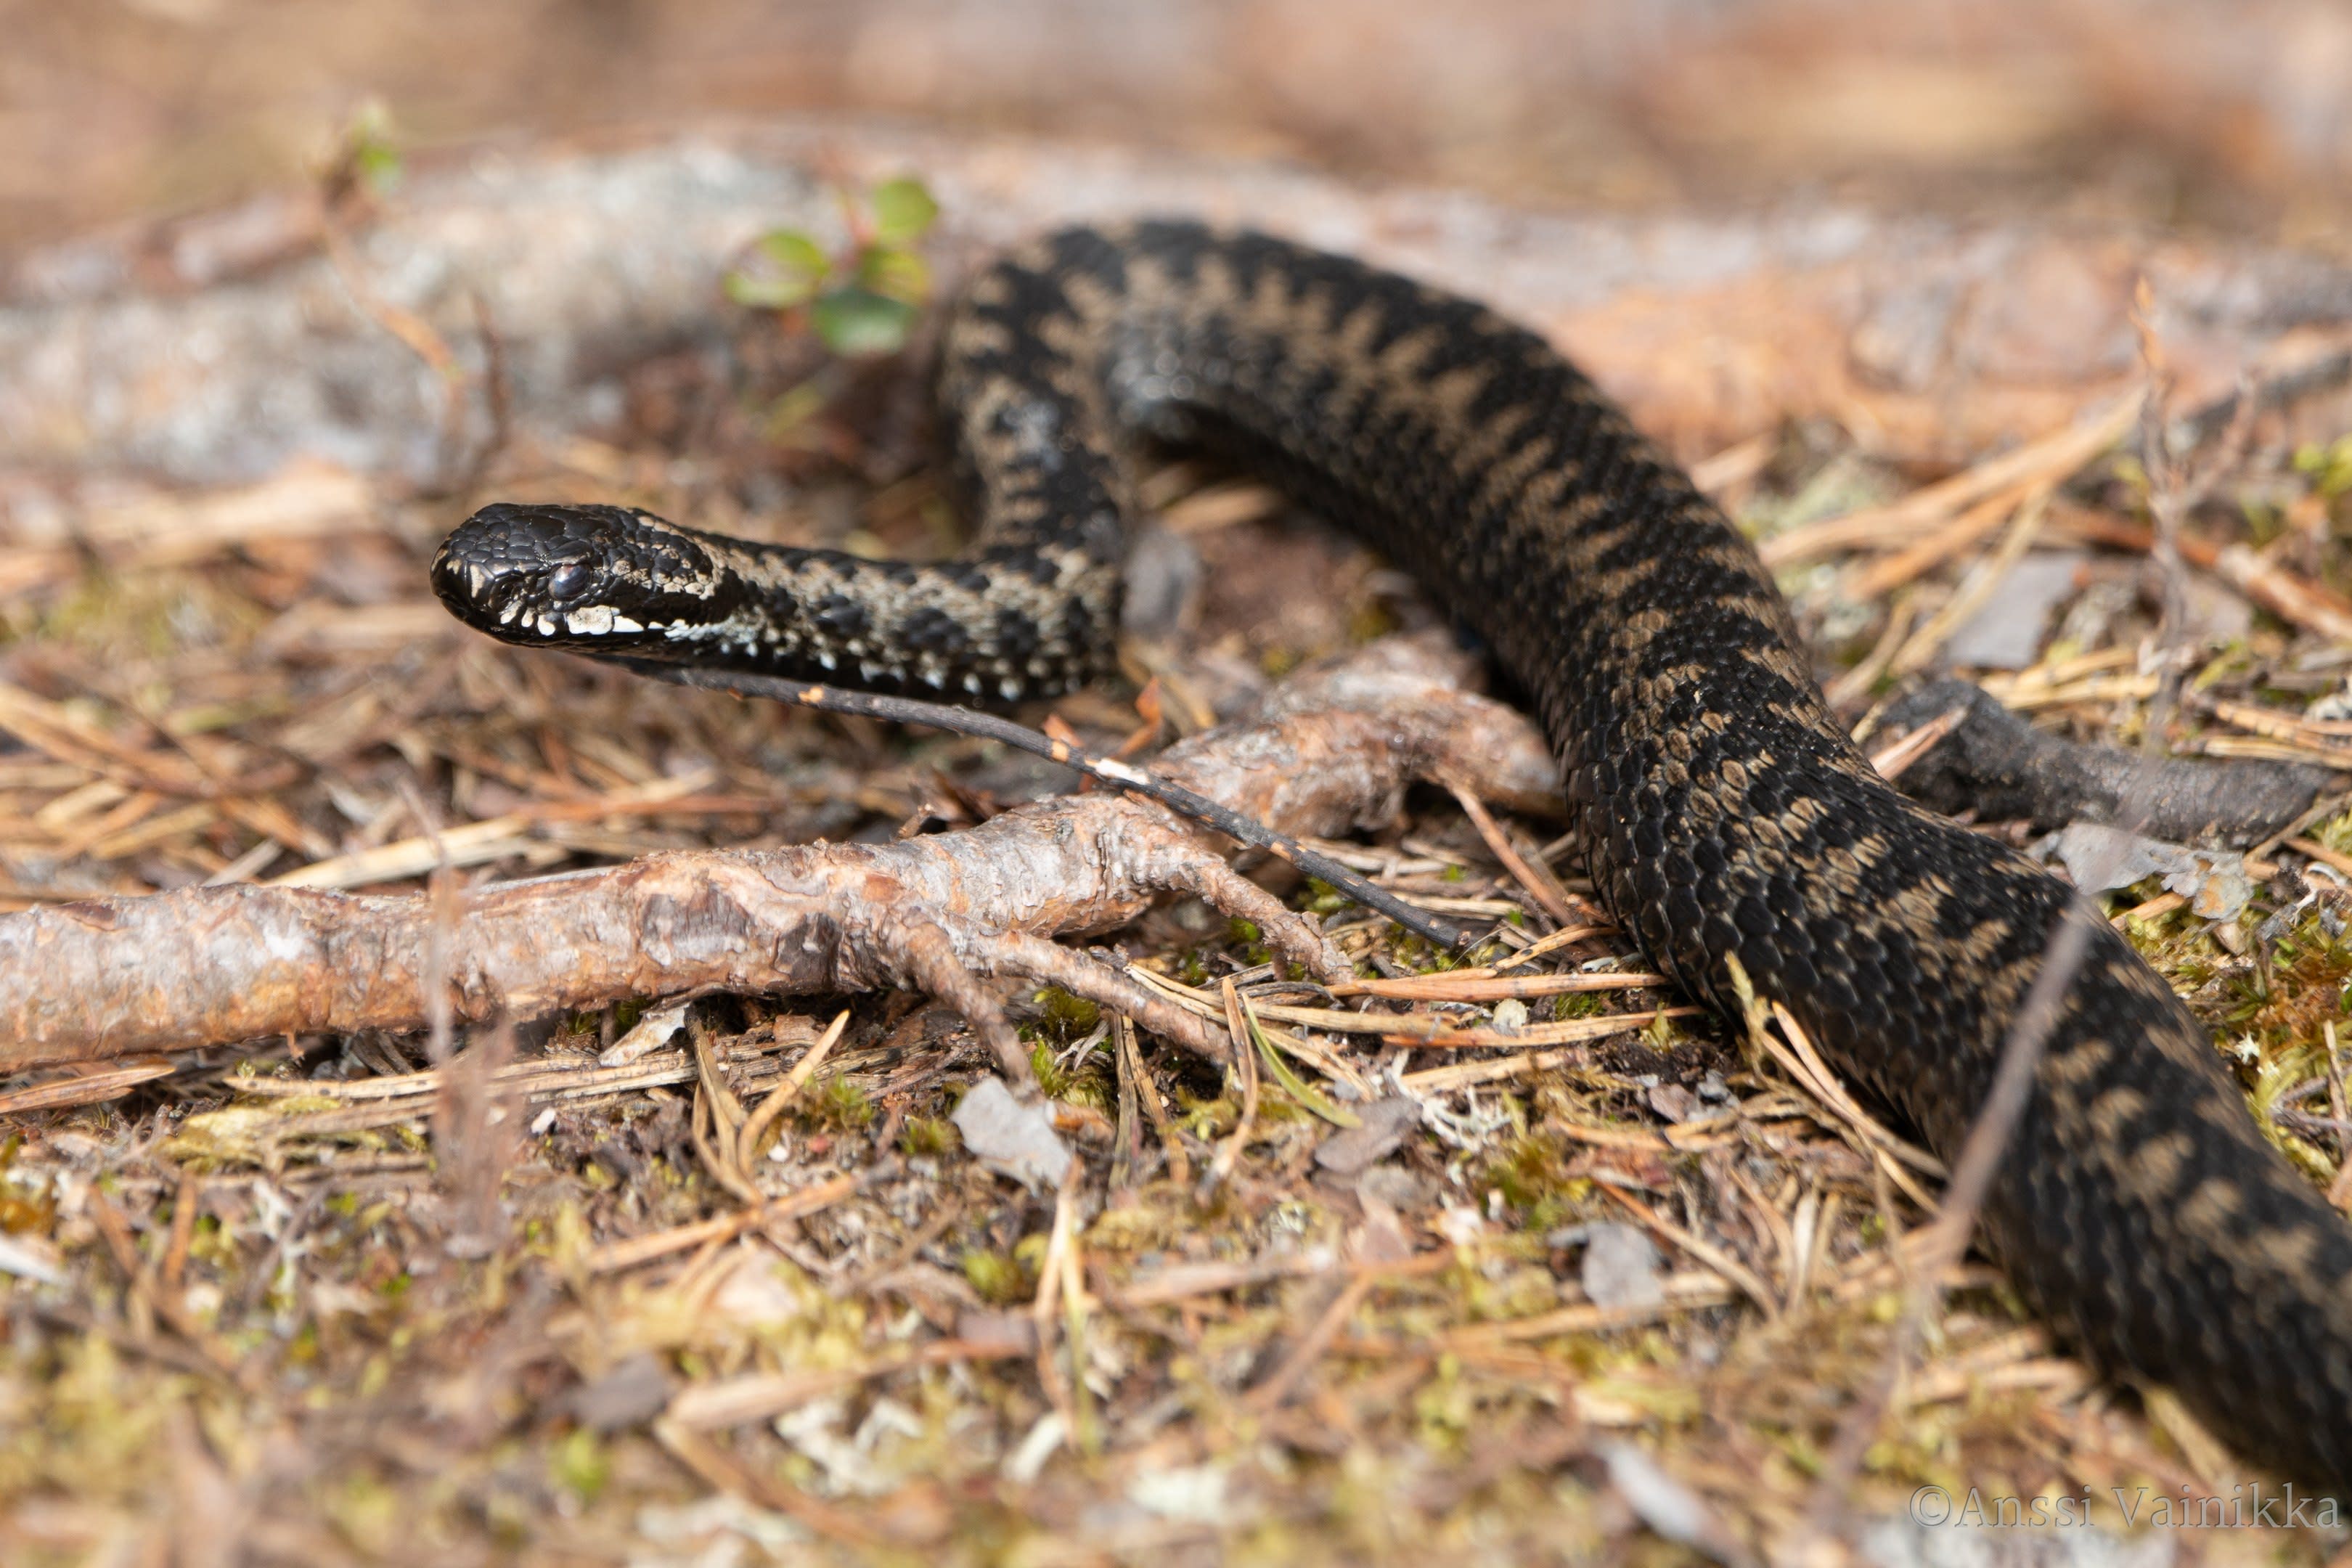 Finland memperkenalkan peraturan baharu untuk mengendalikan ular berbisa